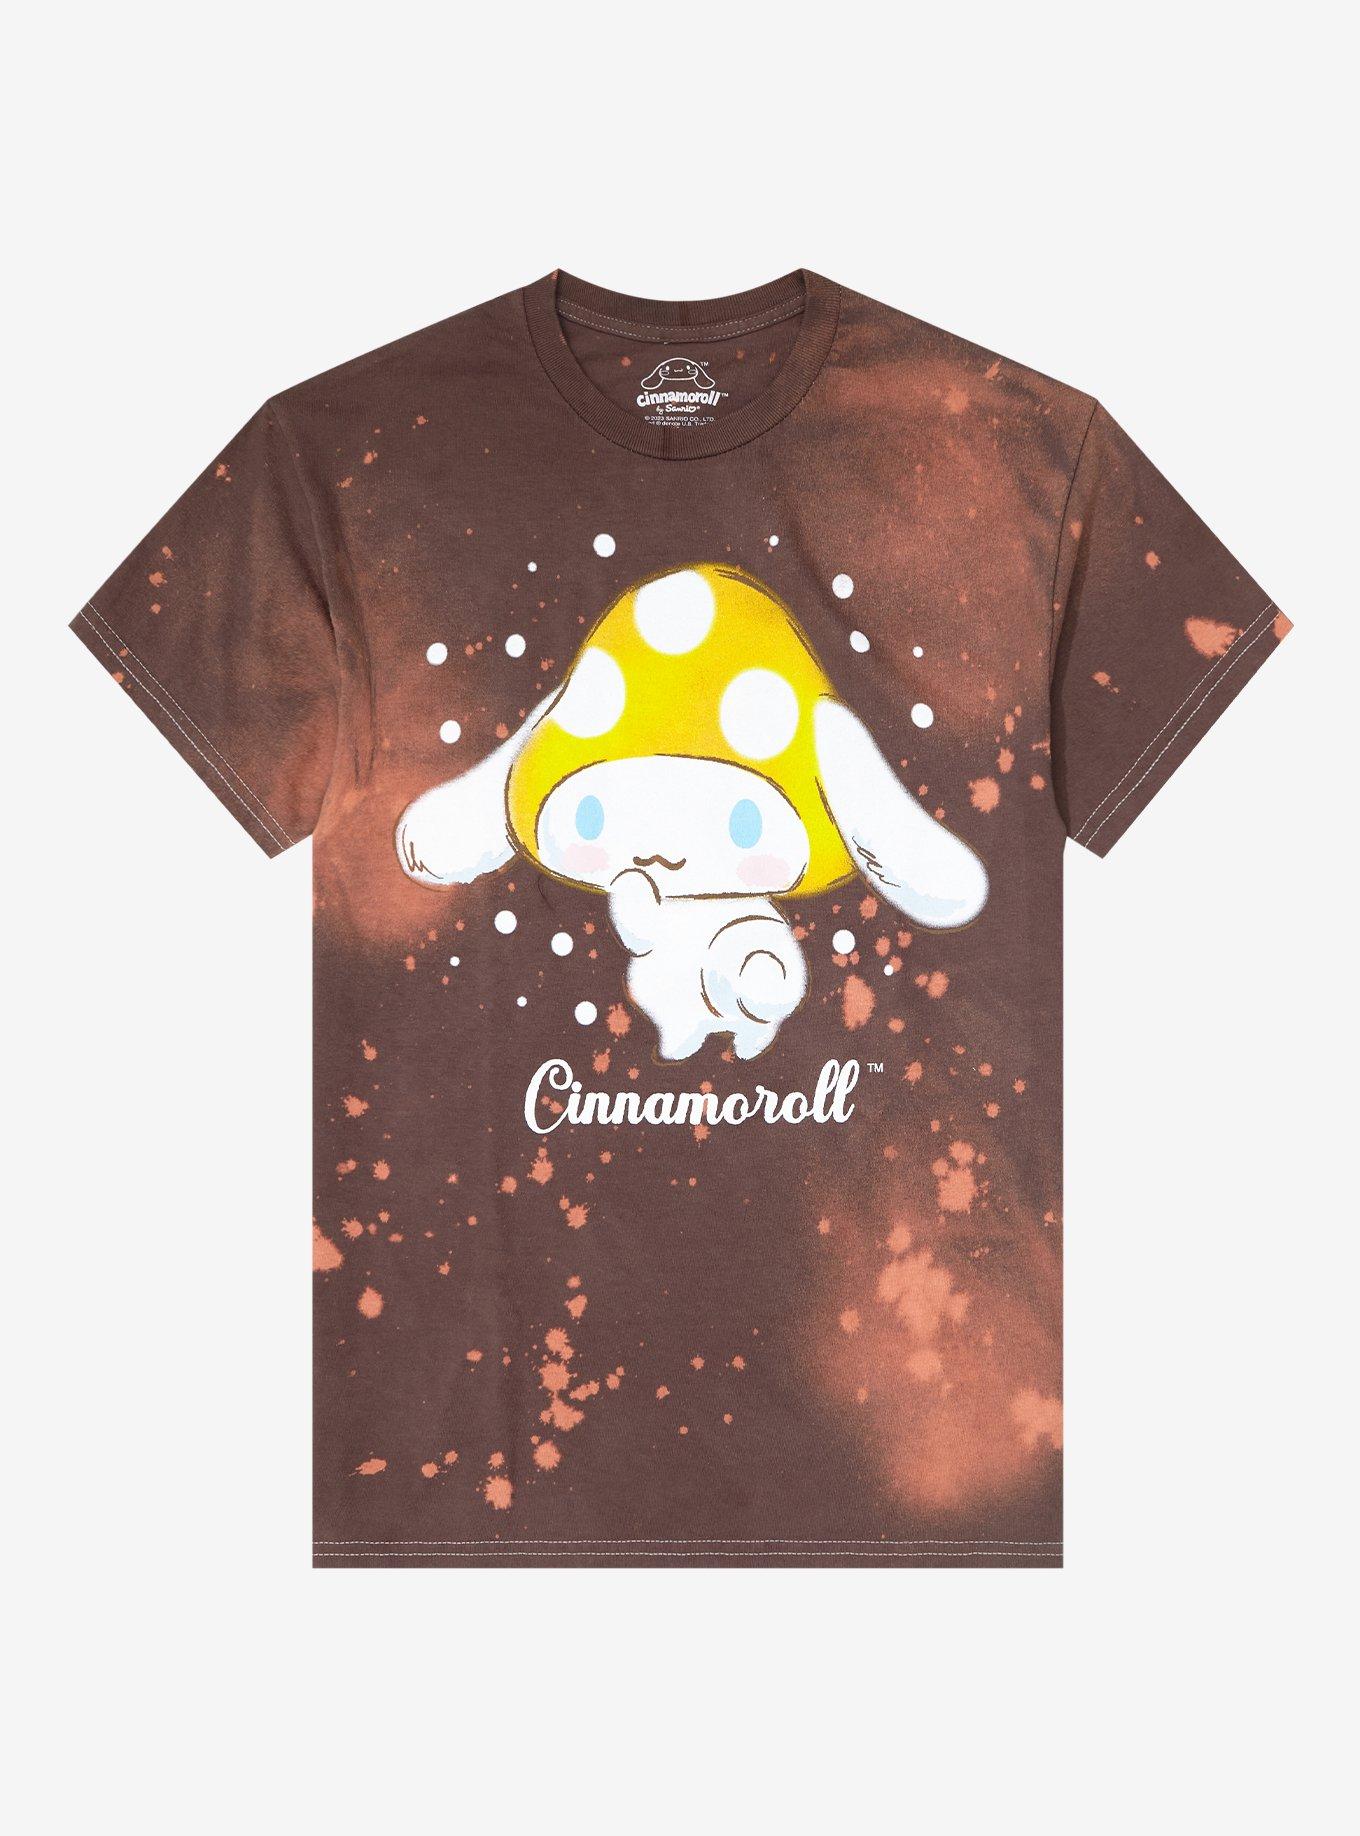 Cinnamoroll Mushroom Brown Tie-Dye Boyfriend Fit Girls T-Shirt